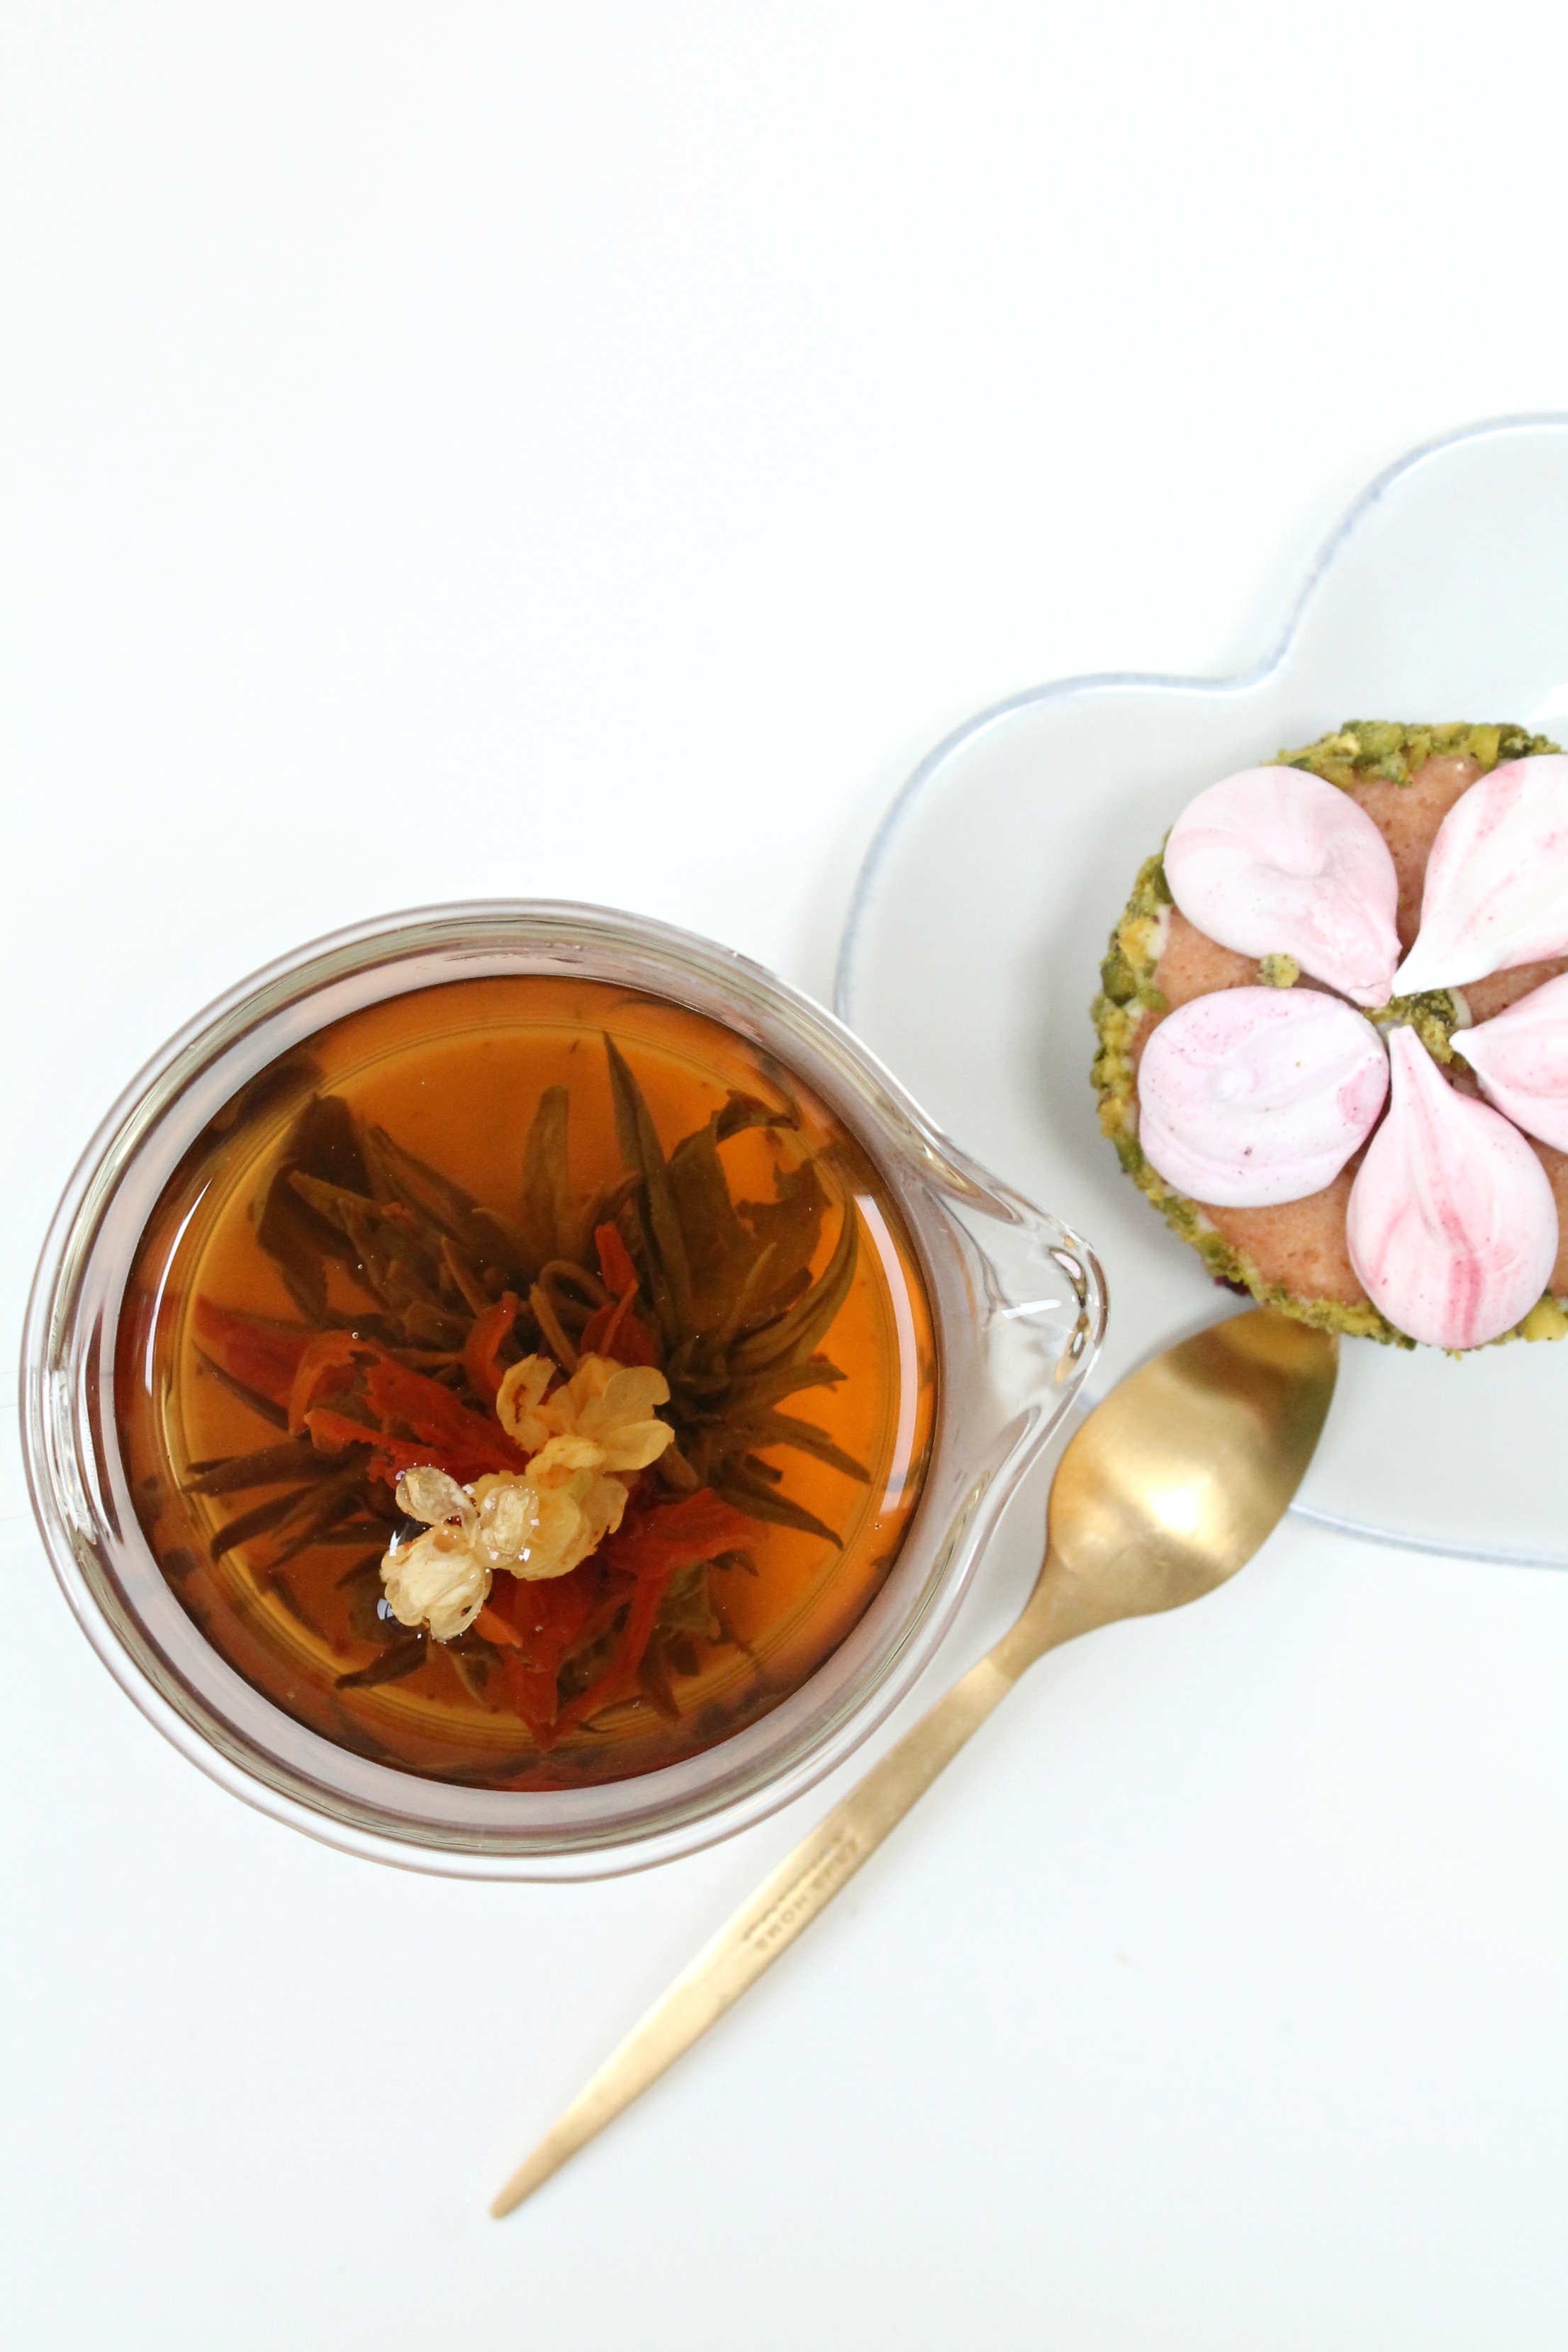 Jing-flower-tea-photo-by-Little-Big-Bell